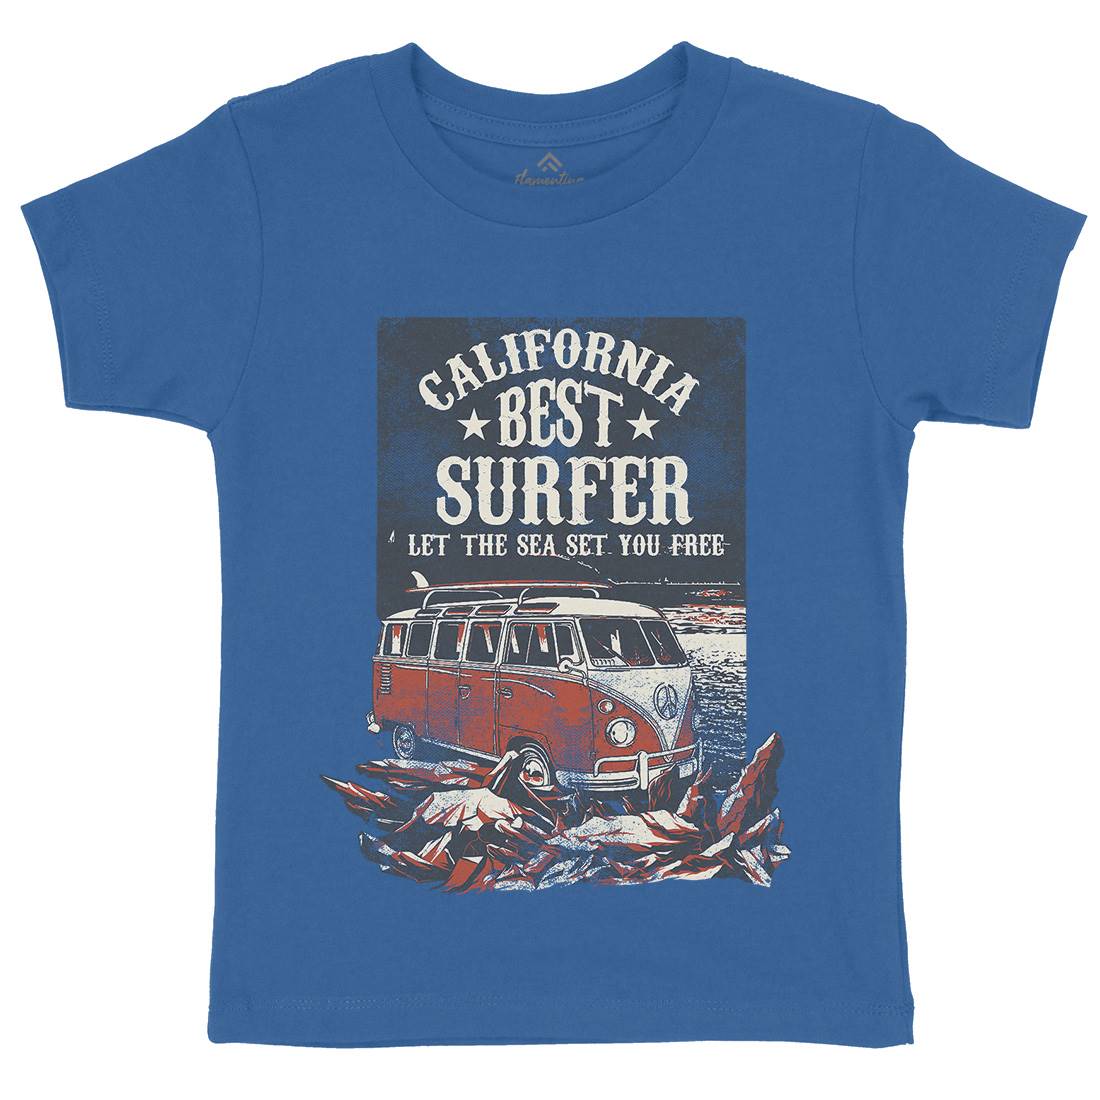 Let The Sea Set You Free Kids Crew Neck T-Shirt Surf C956